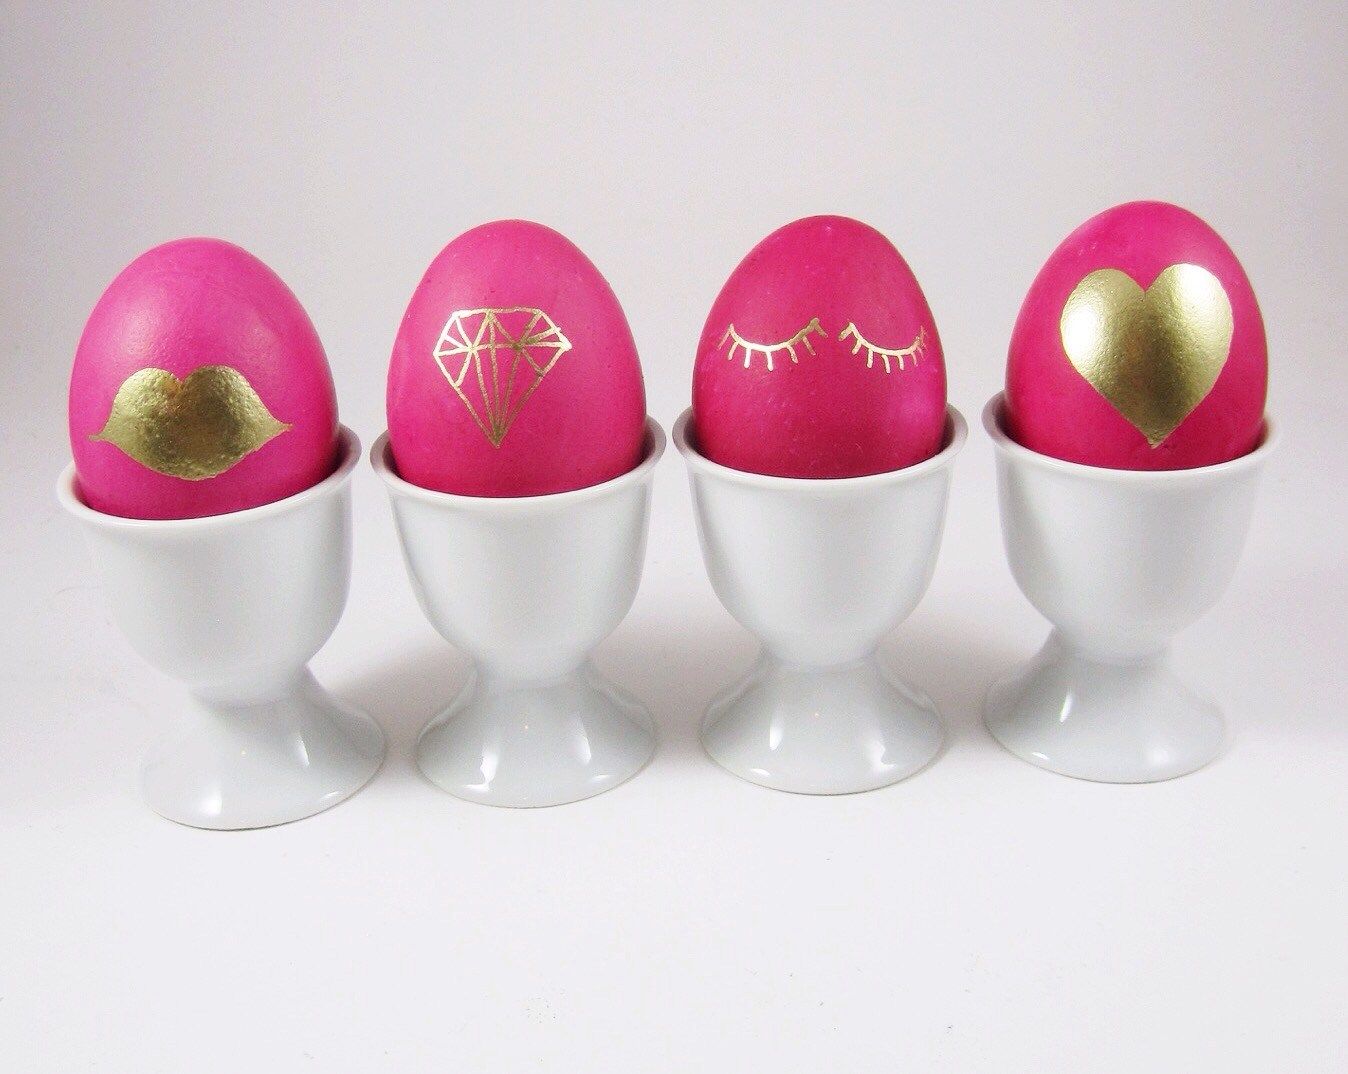 Easter egg decorating ideas: Gold-painted Easter eggs at Gold Standard Workshop